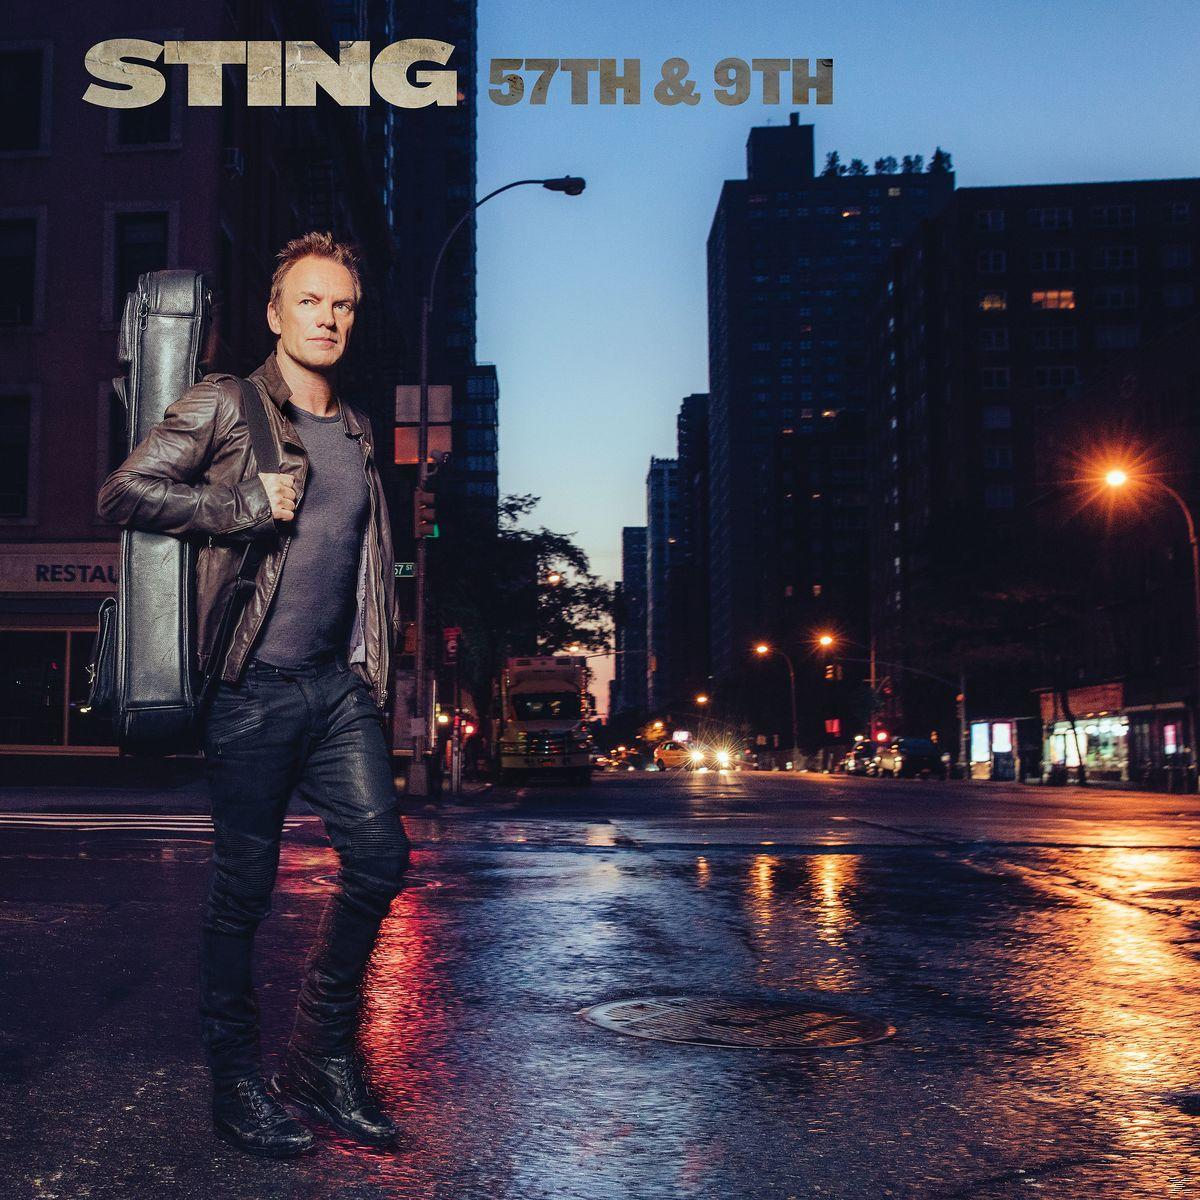 Sting - (Vinyl) (Black & Vinyl) - 9th 57th